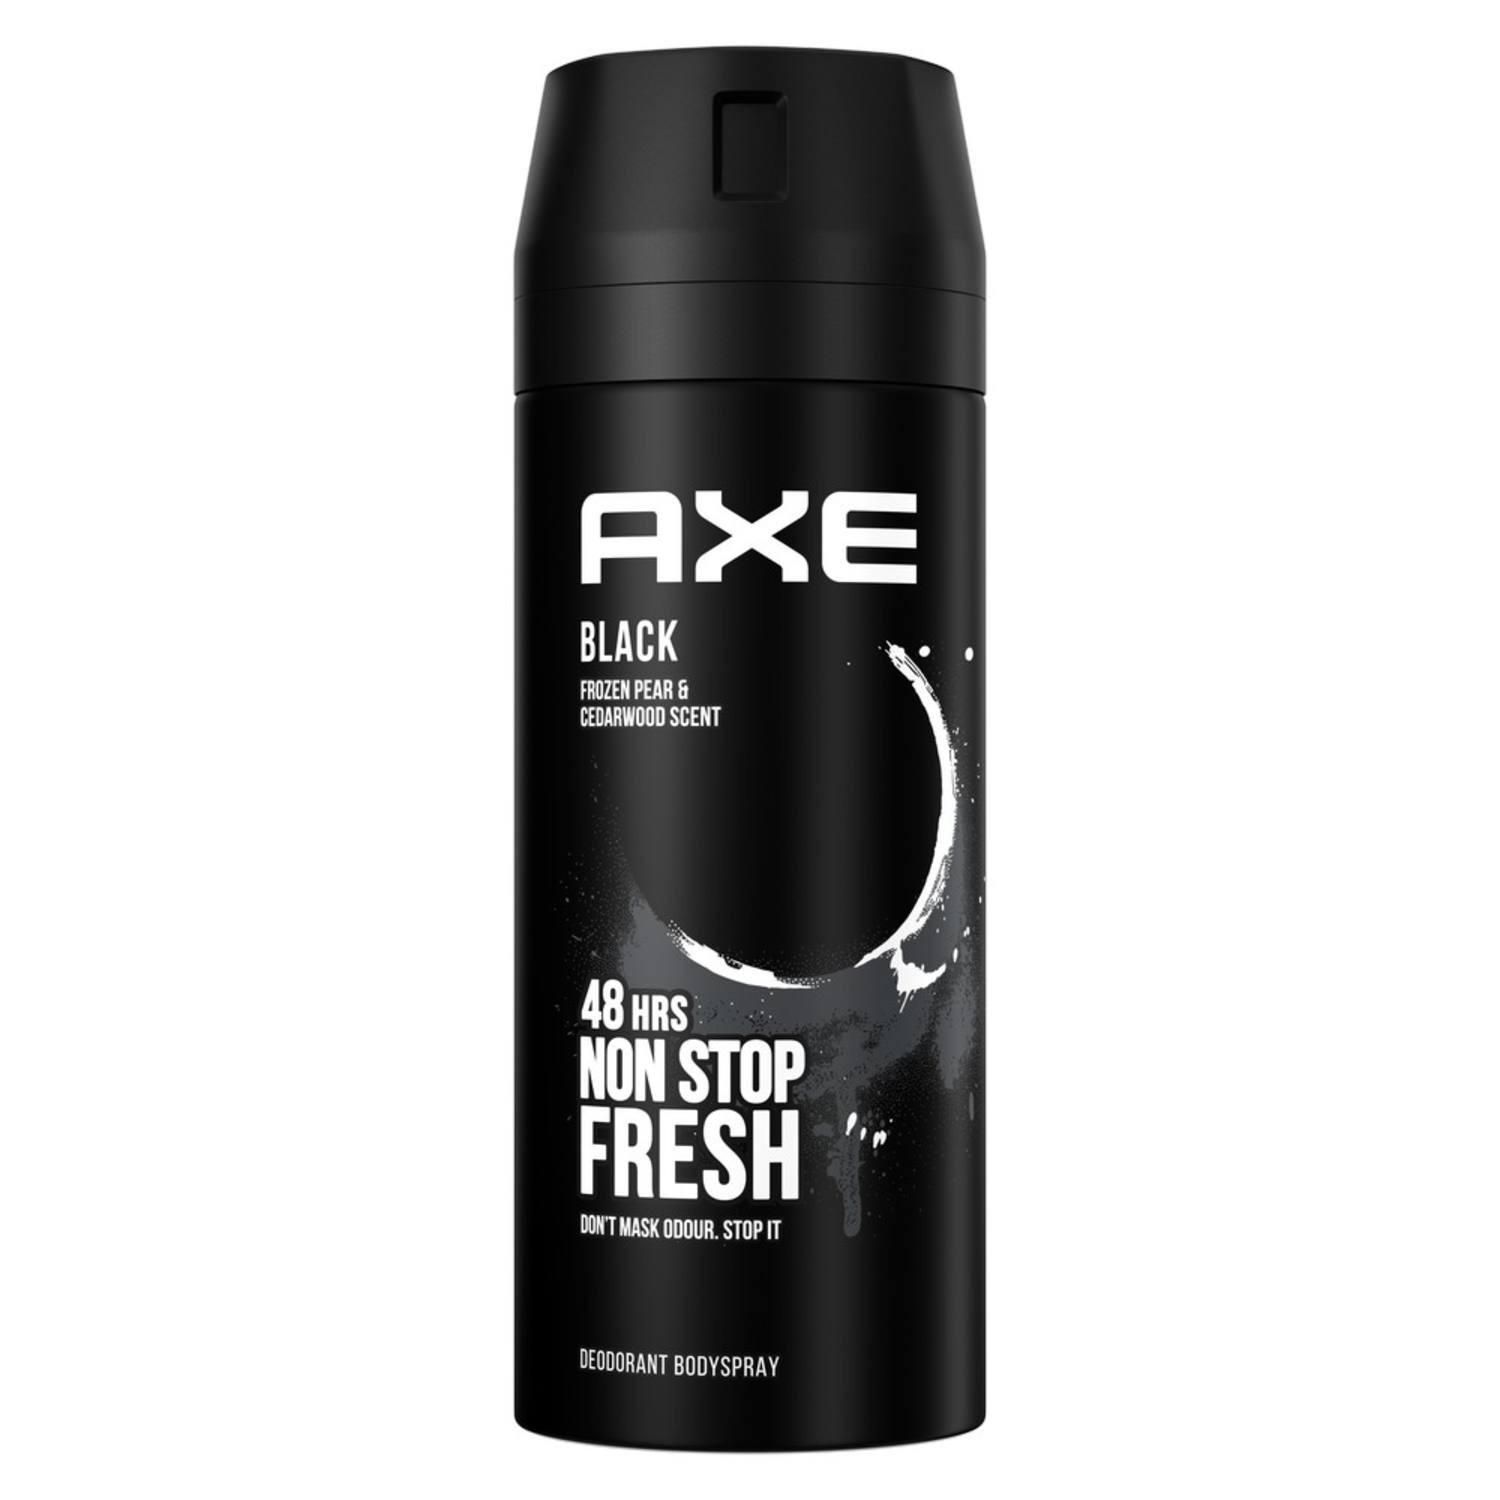 Axe Black Deodorant Bodyspray